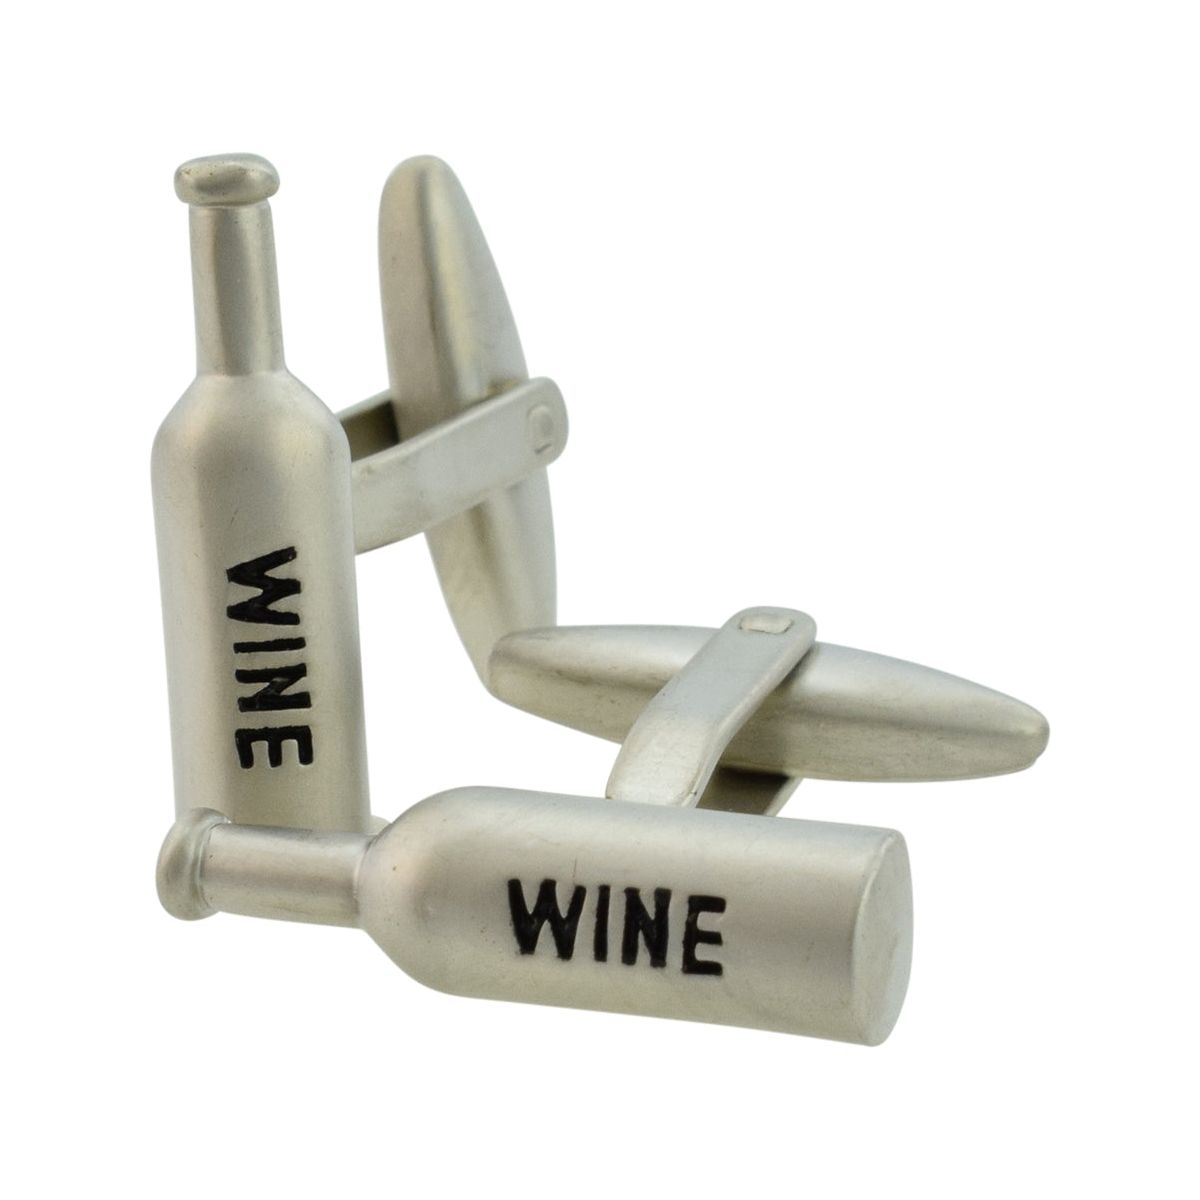 Wine Bottle Cufflinks - Ashton and Finch